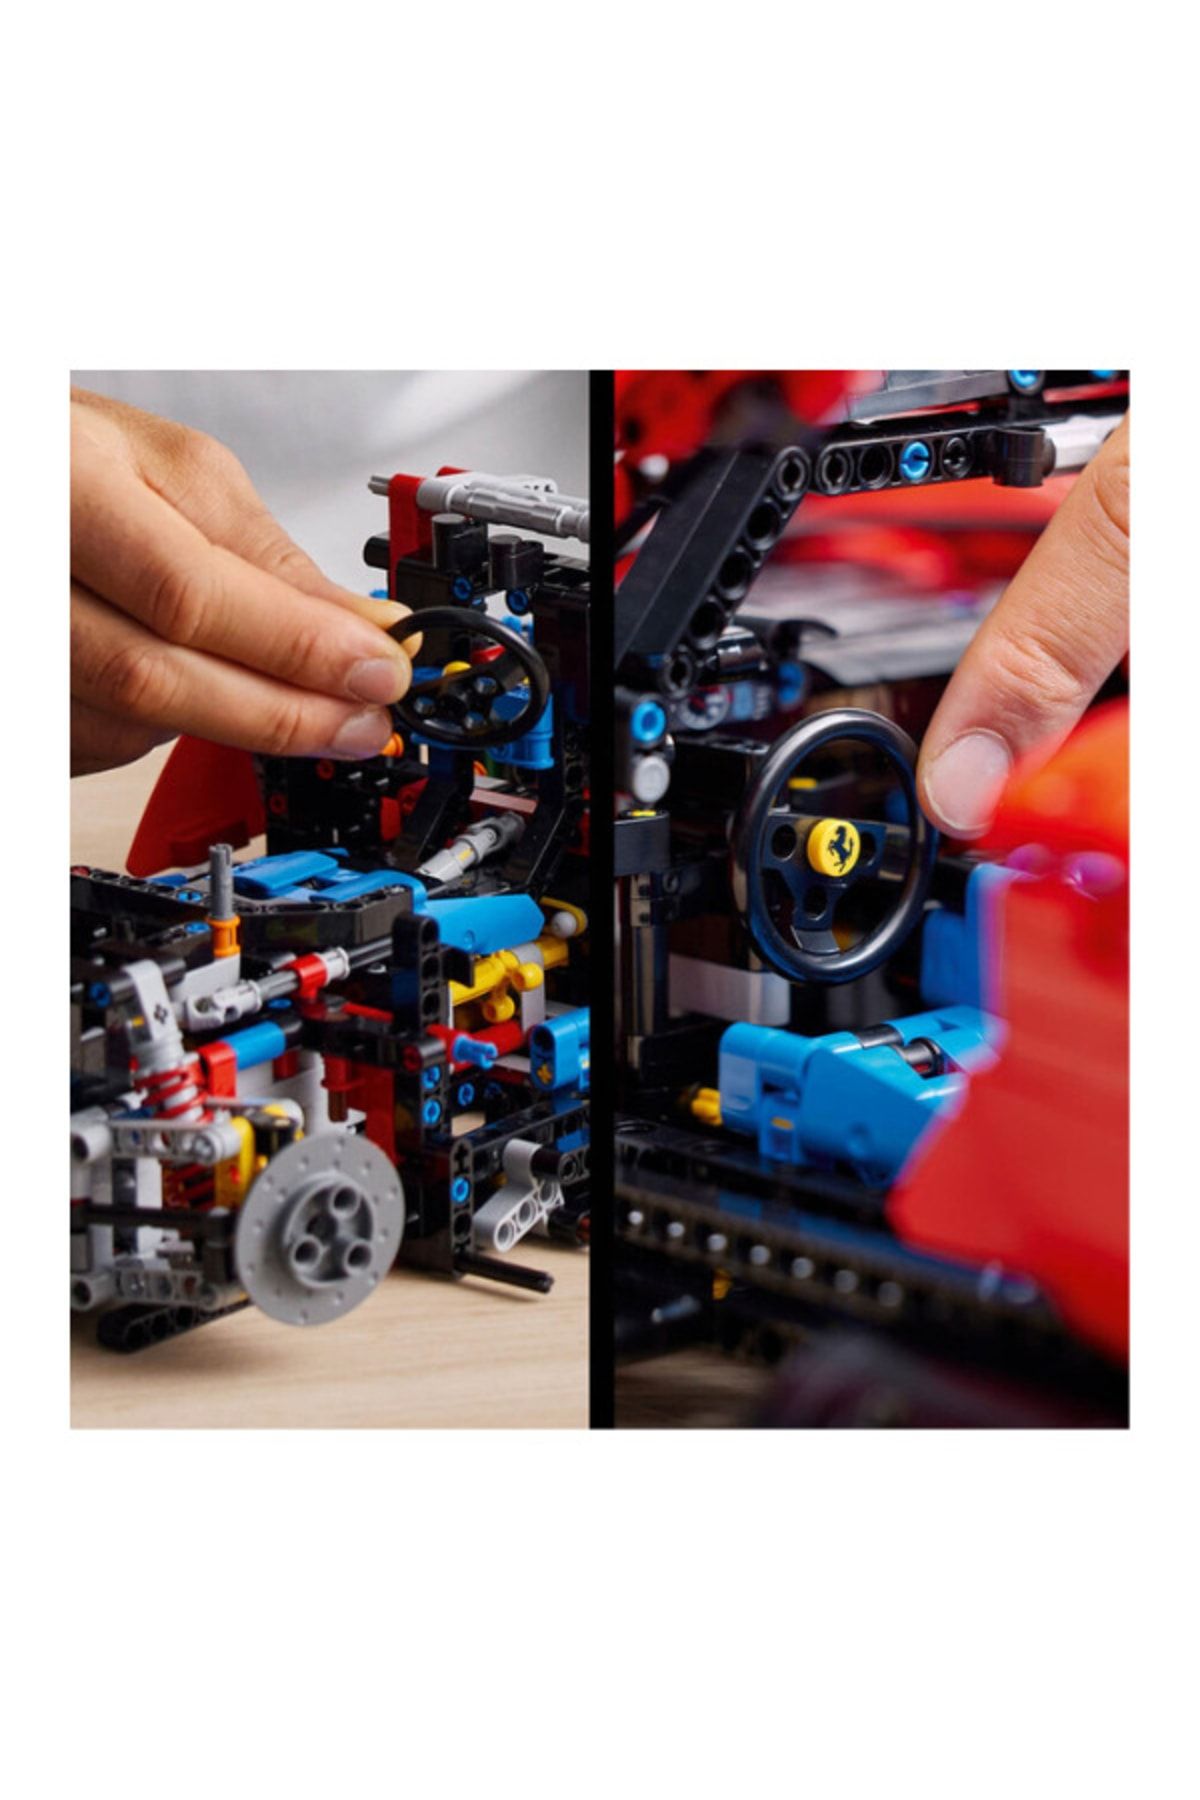 LEGO لگو Technic Ferrari Daytona Sp3 42143 تعداد قطعات: 3778